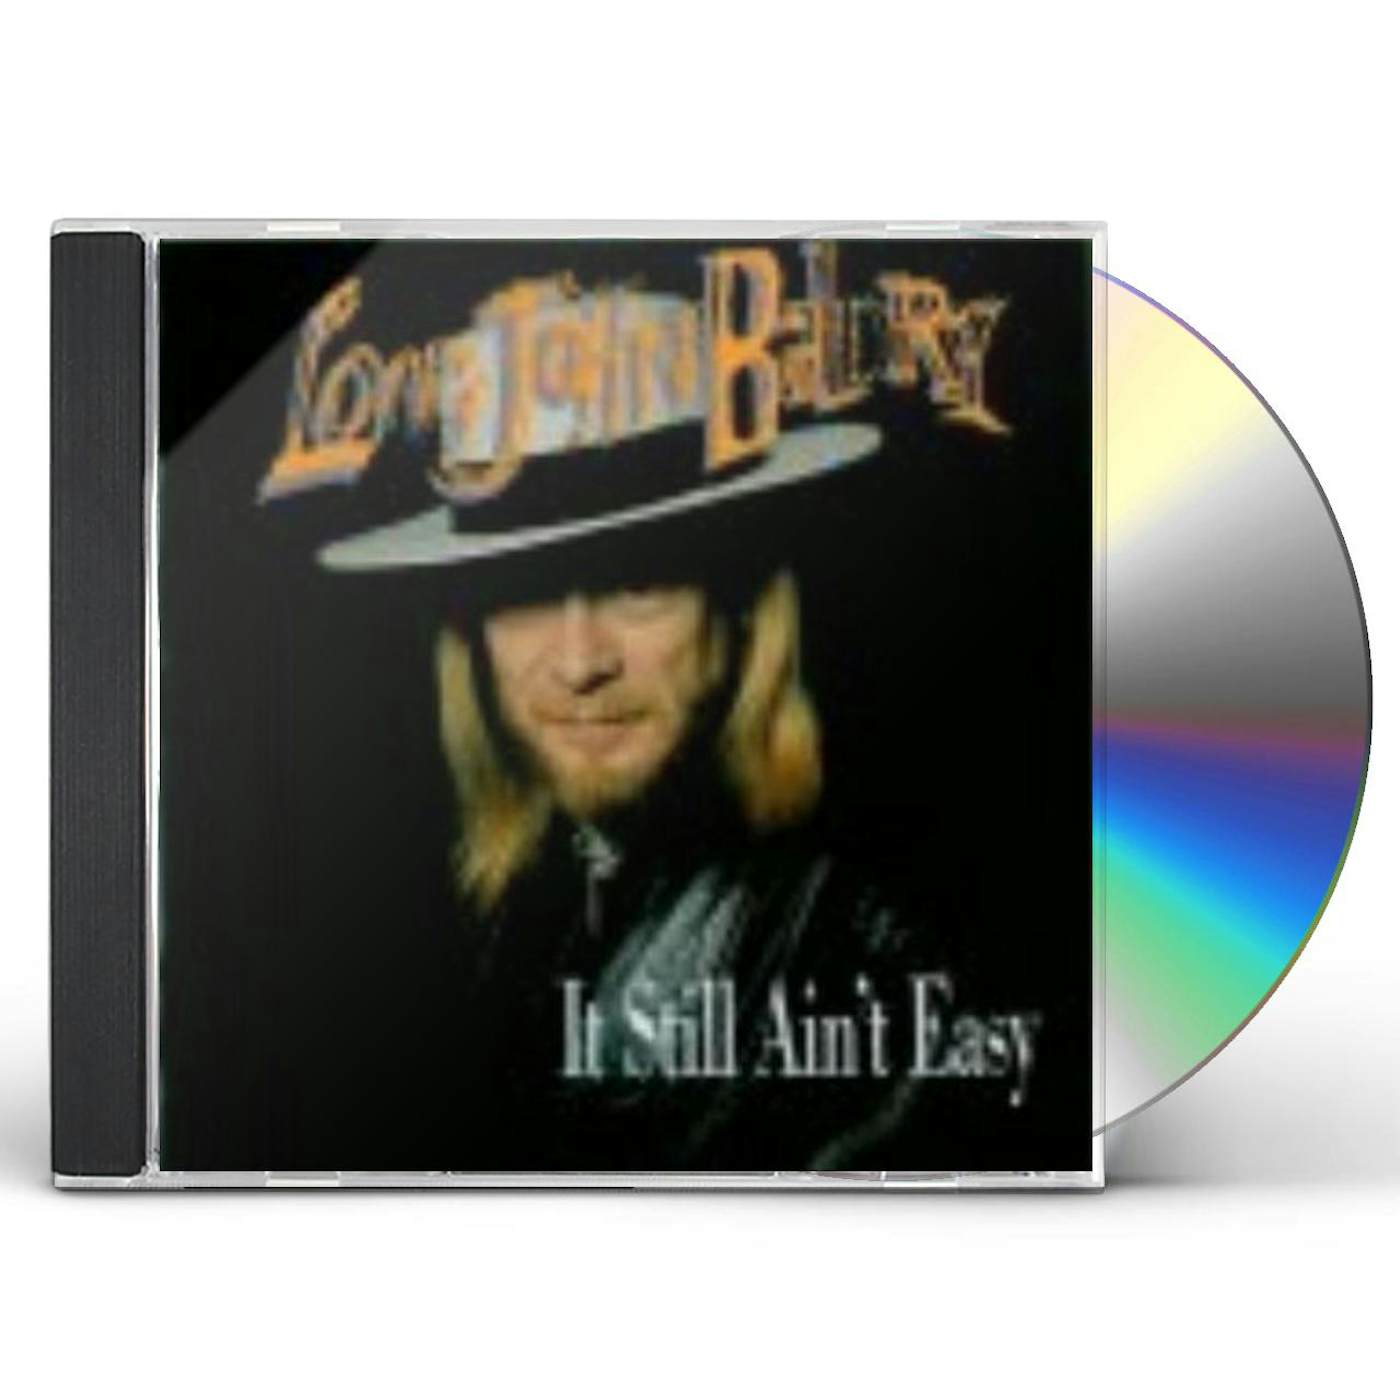 Long John Baldry IT STILL AIN'T EASY CD